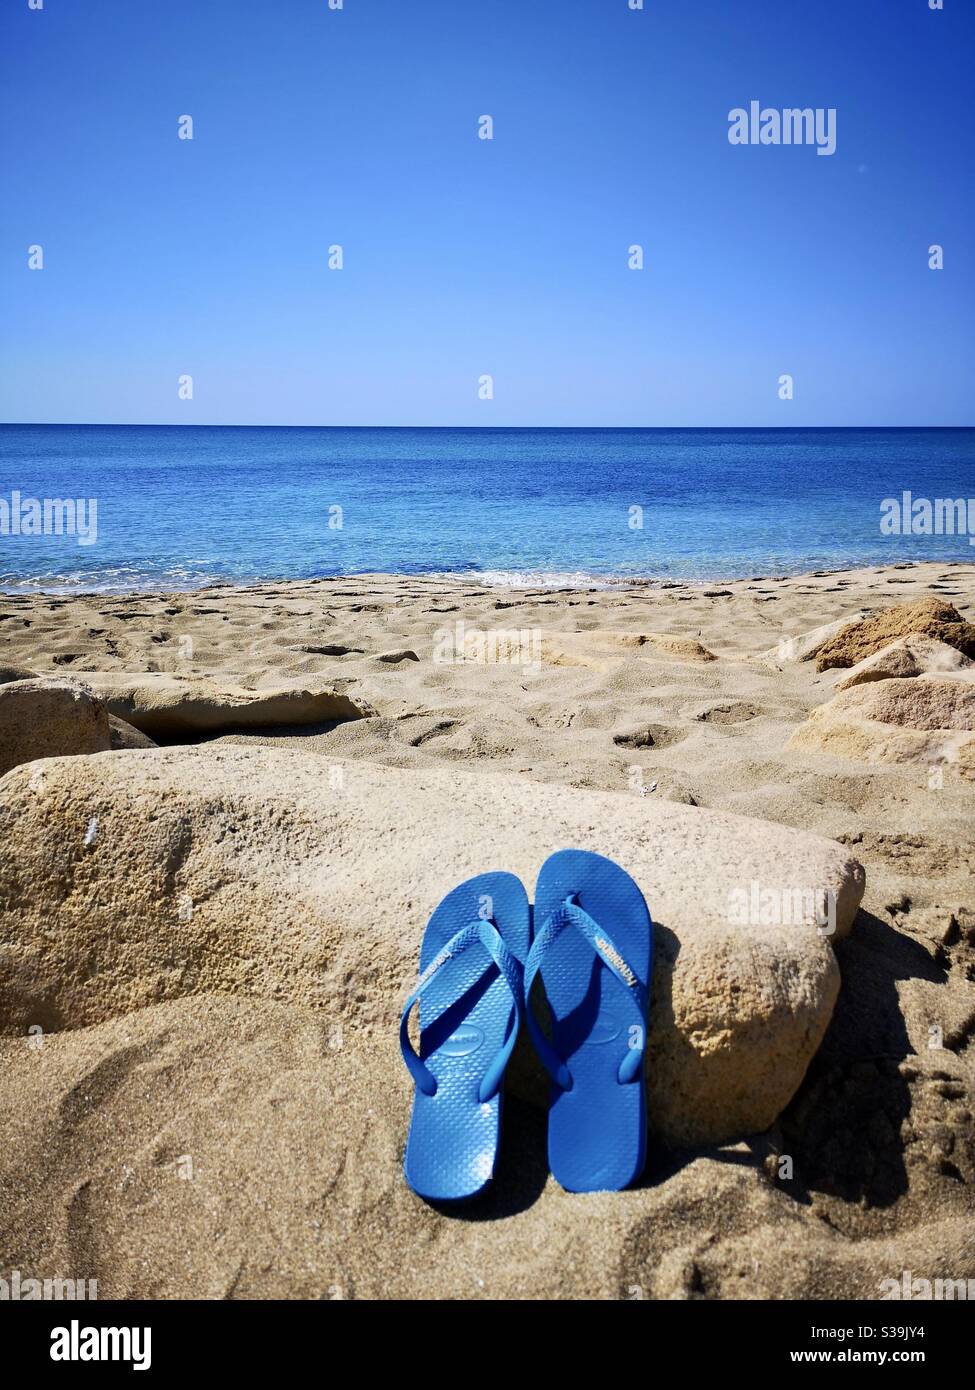 https://c8.alamy.com/comp/S39JY4/turquoise-blue-rubber-flip-flops-on-sandy-beach-S39JY4.jpg